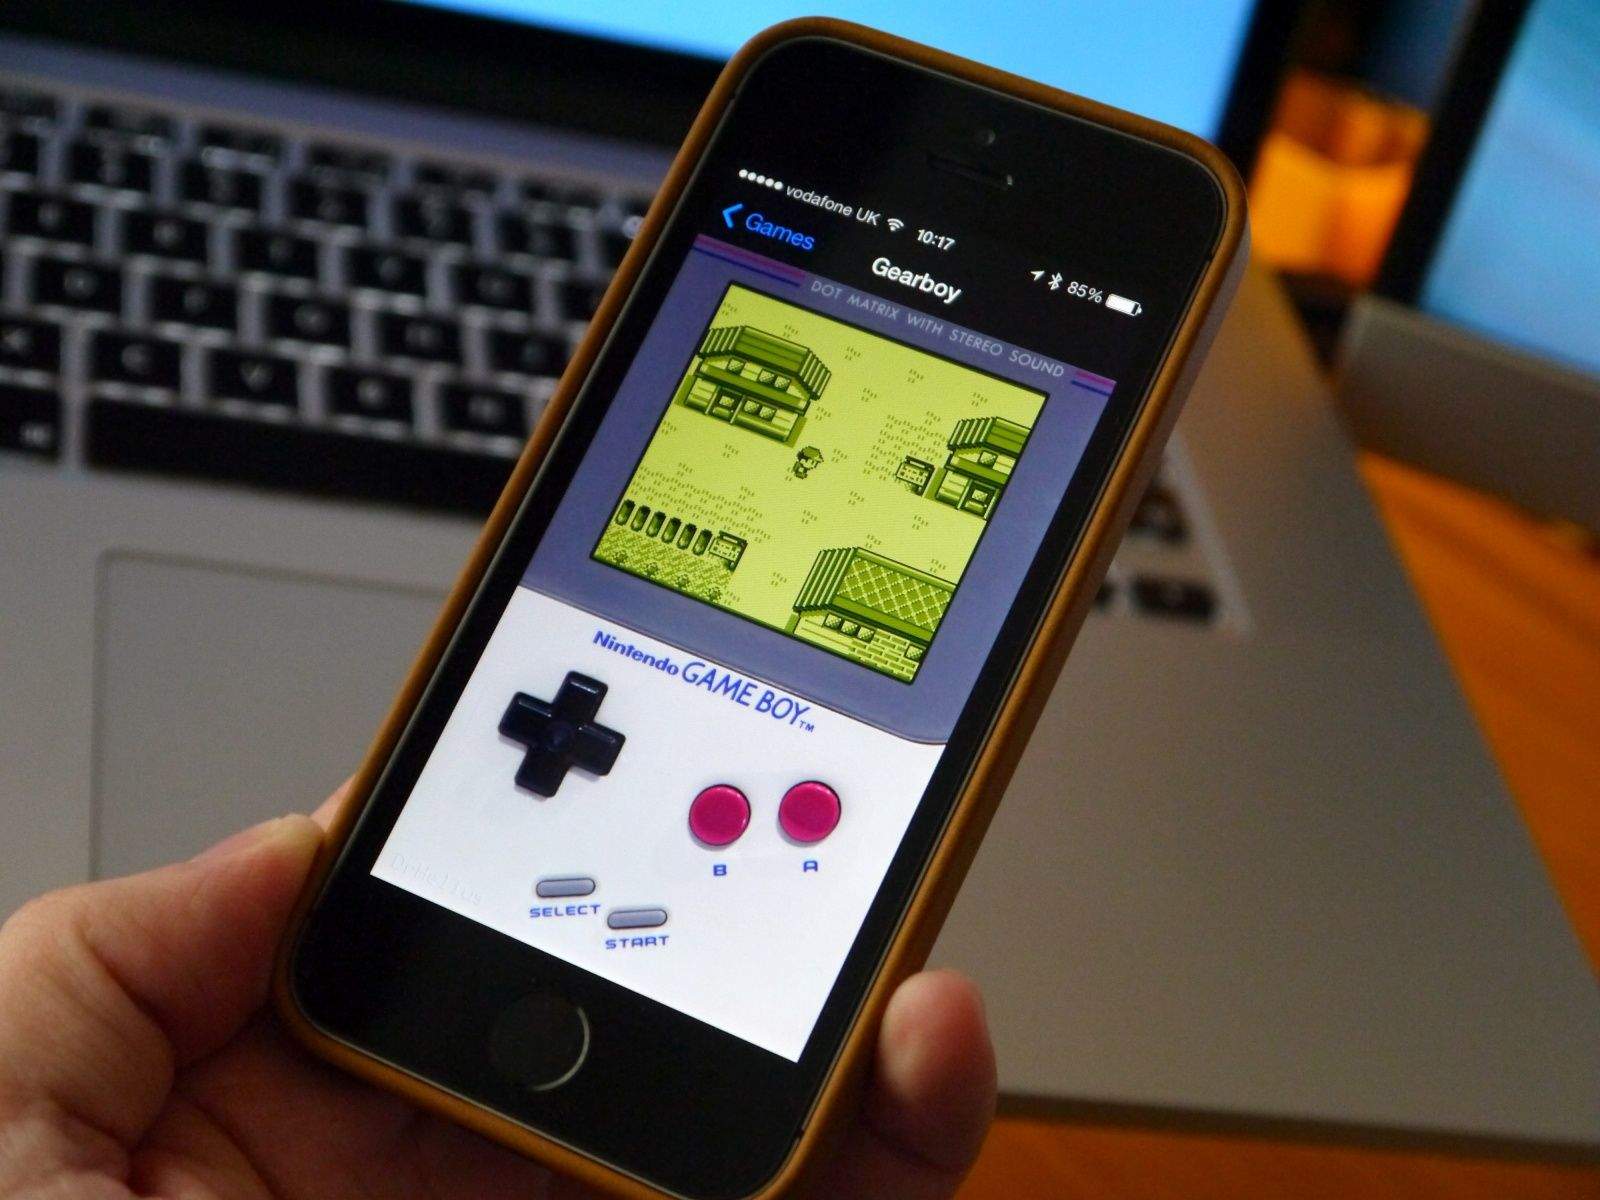 Gaviota Dejar abajo Manto Another Game Boy Advance Emulator Sneaks Into The App Store | Cult of Mac